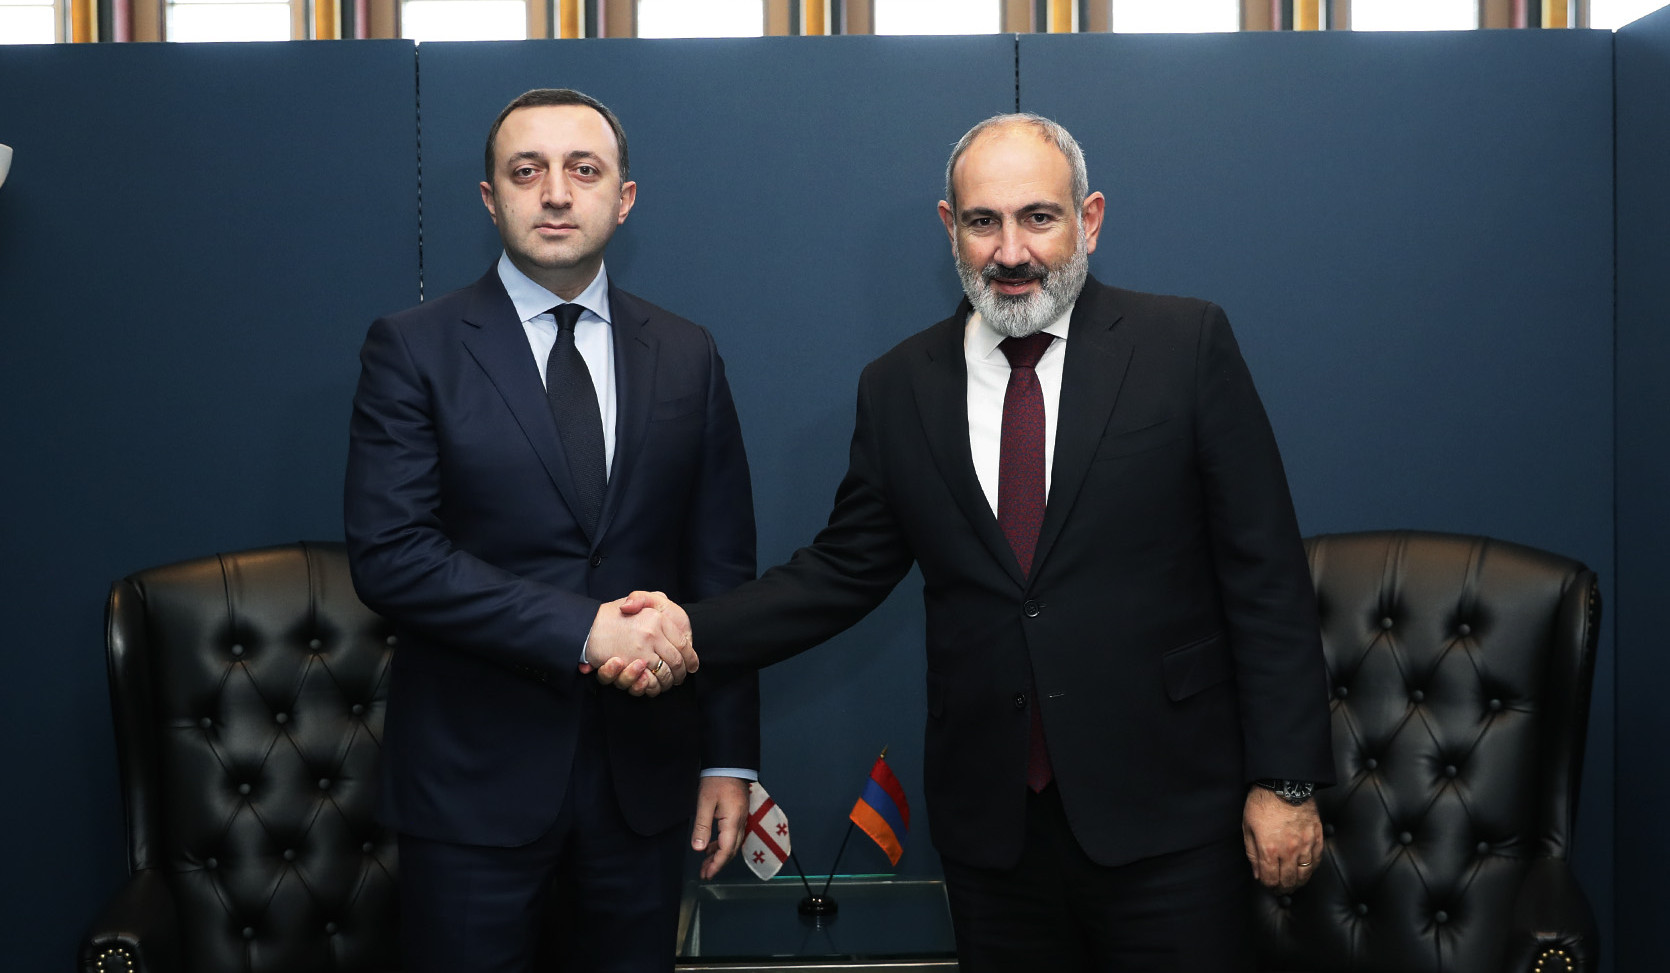 Armenian, Georgian Prime Ministers meet in New York, 1lurer repots. 